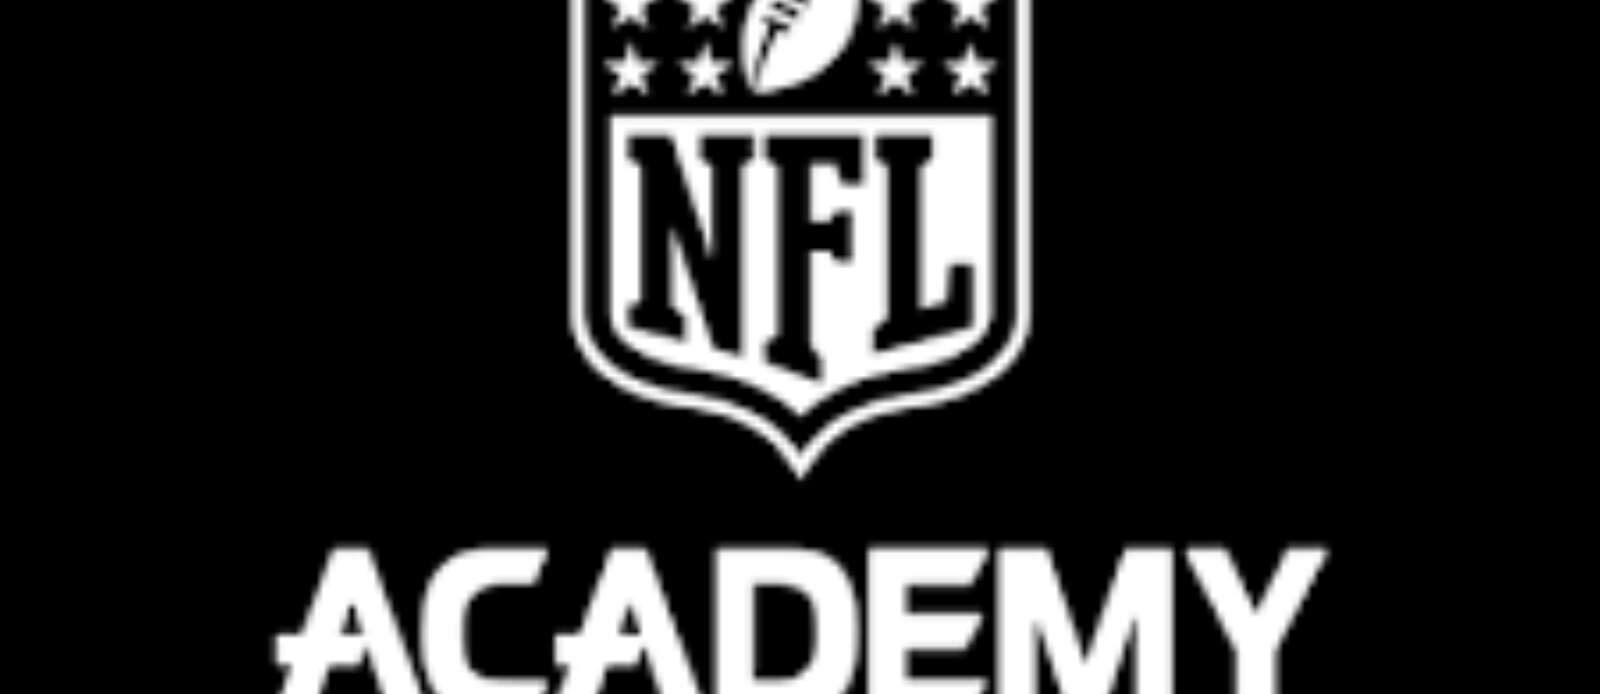 Manager, NFL Academy (UK) / Head of NFL Academy Header Image.